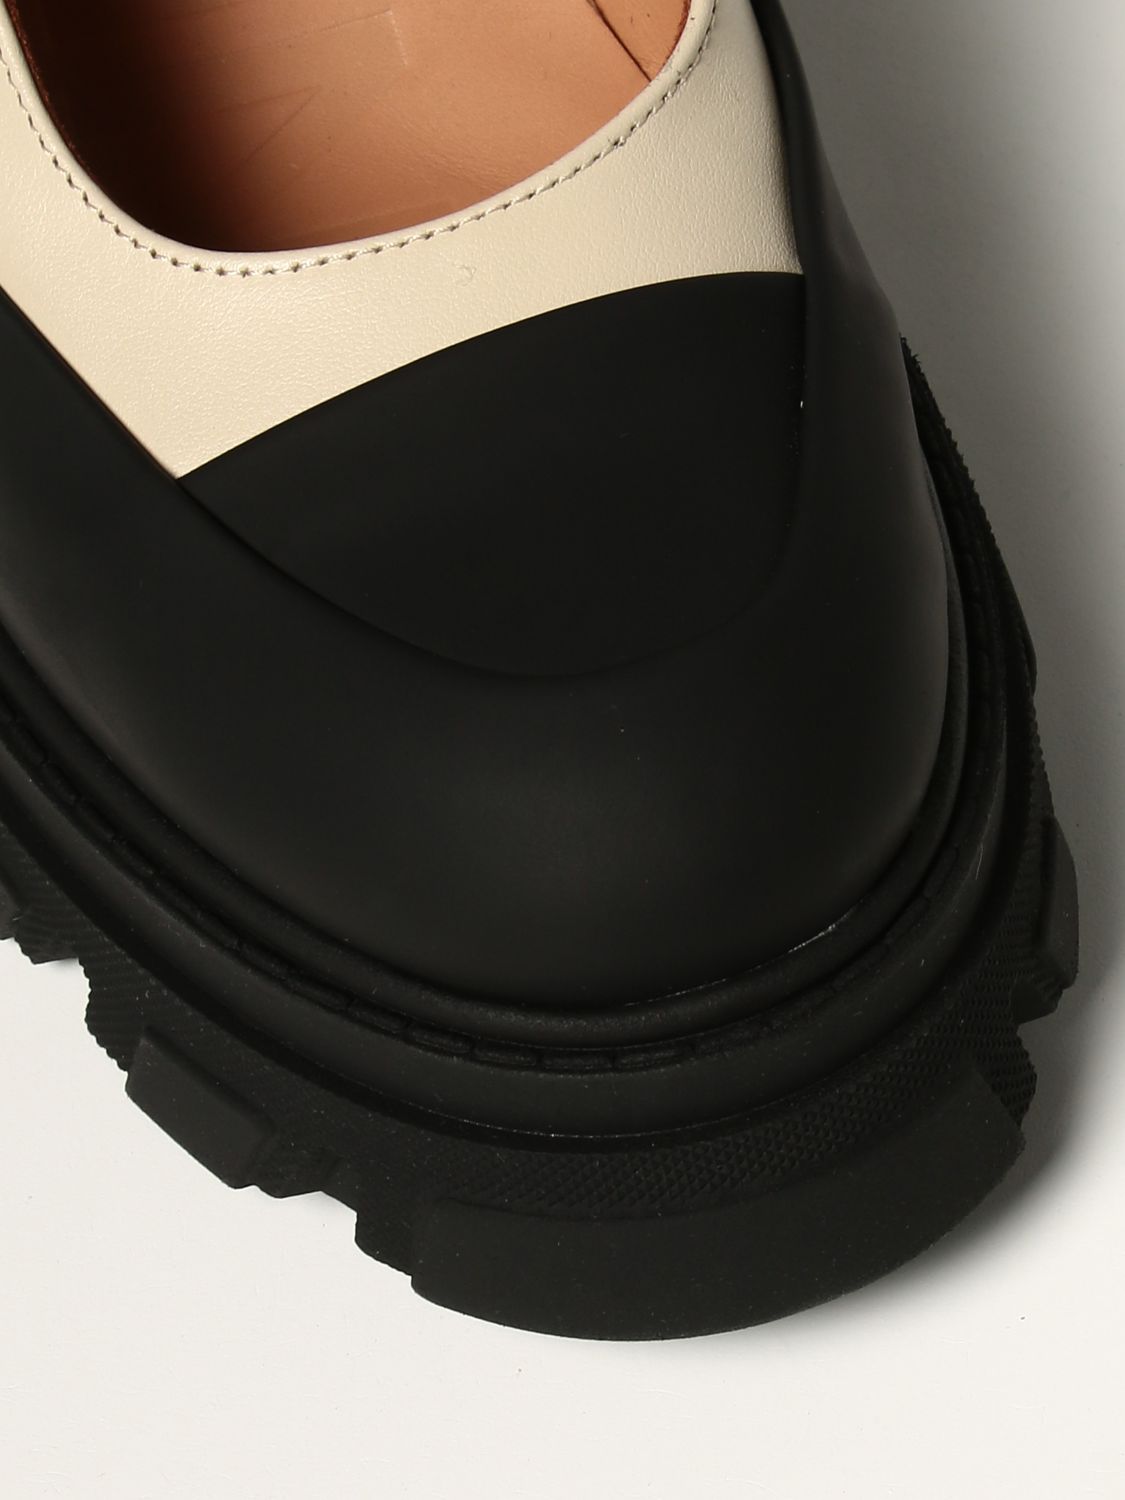 High heel shoes Ganni: Mary Jane Ganni leather slingbacks yellow cream 4